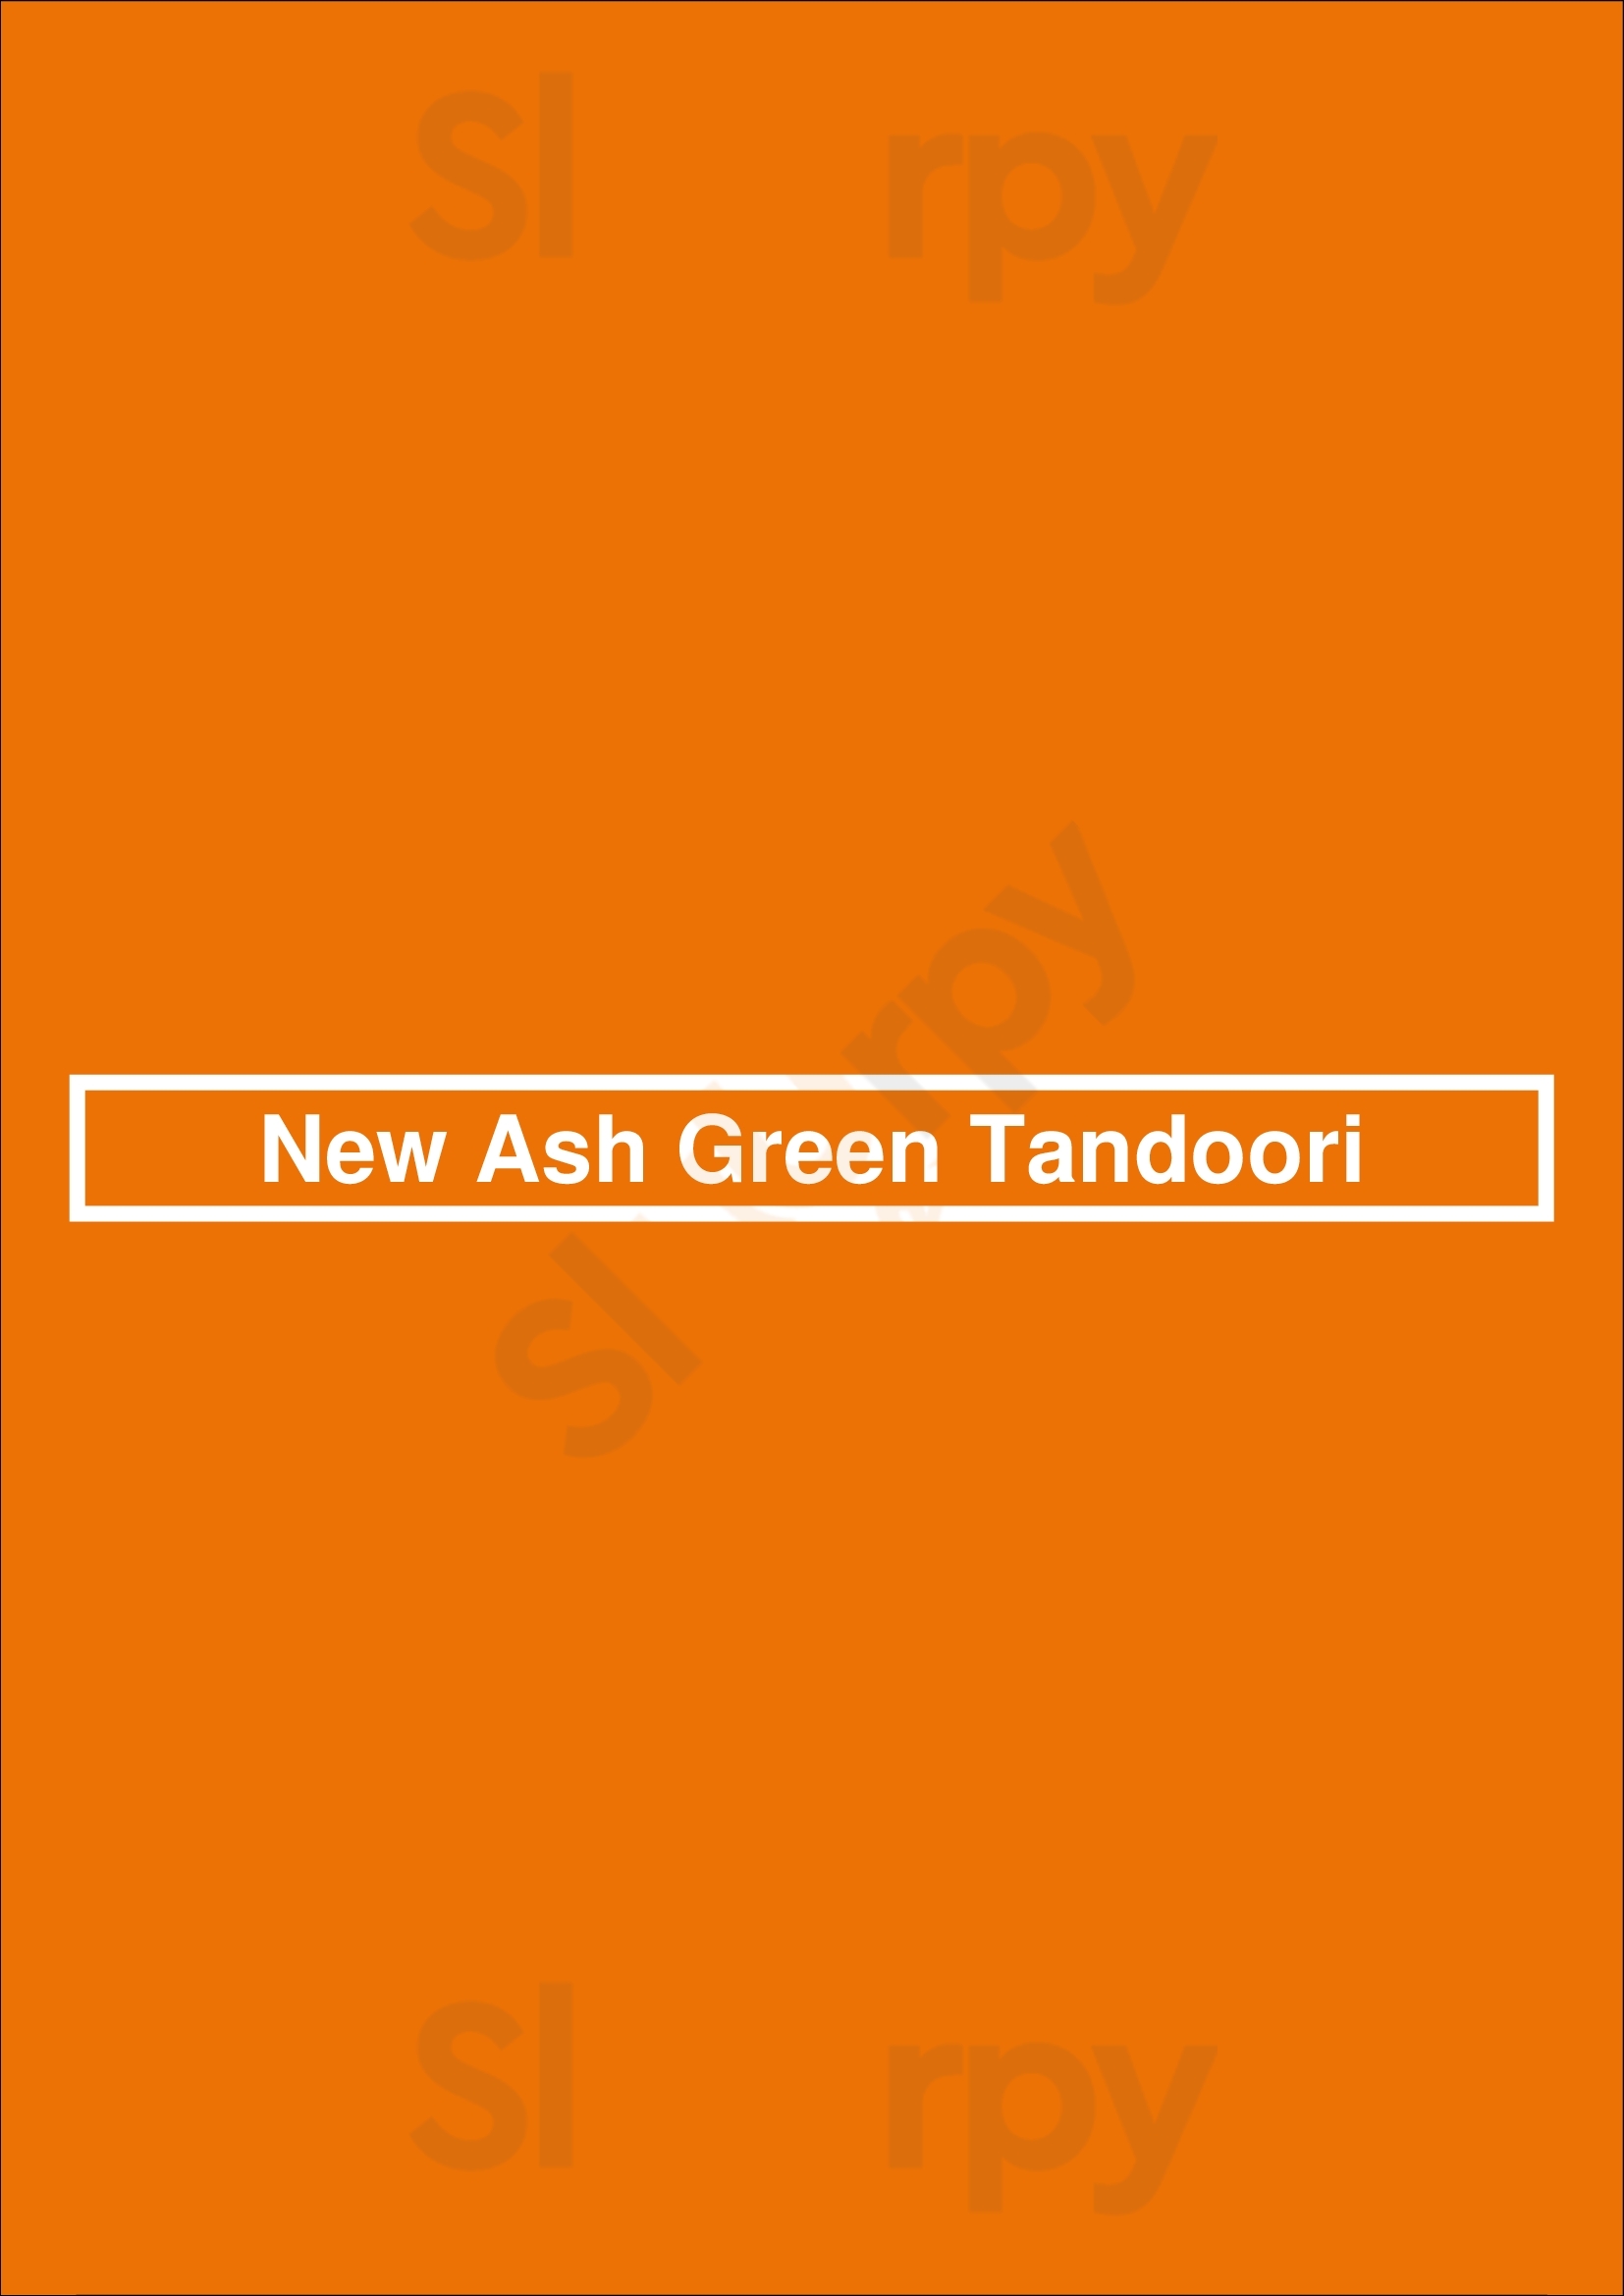 New Ash Green Tandoori New Ash Green Menu - 1